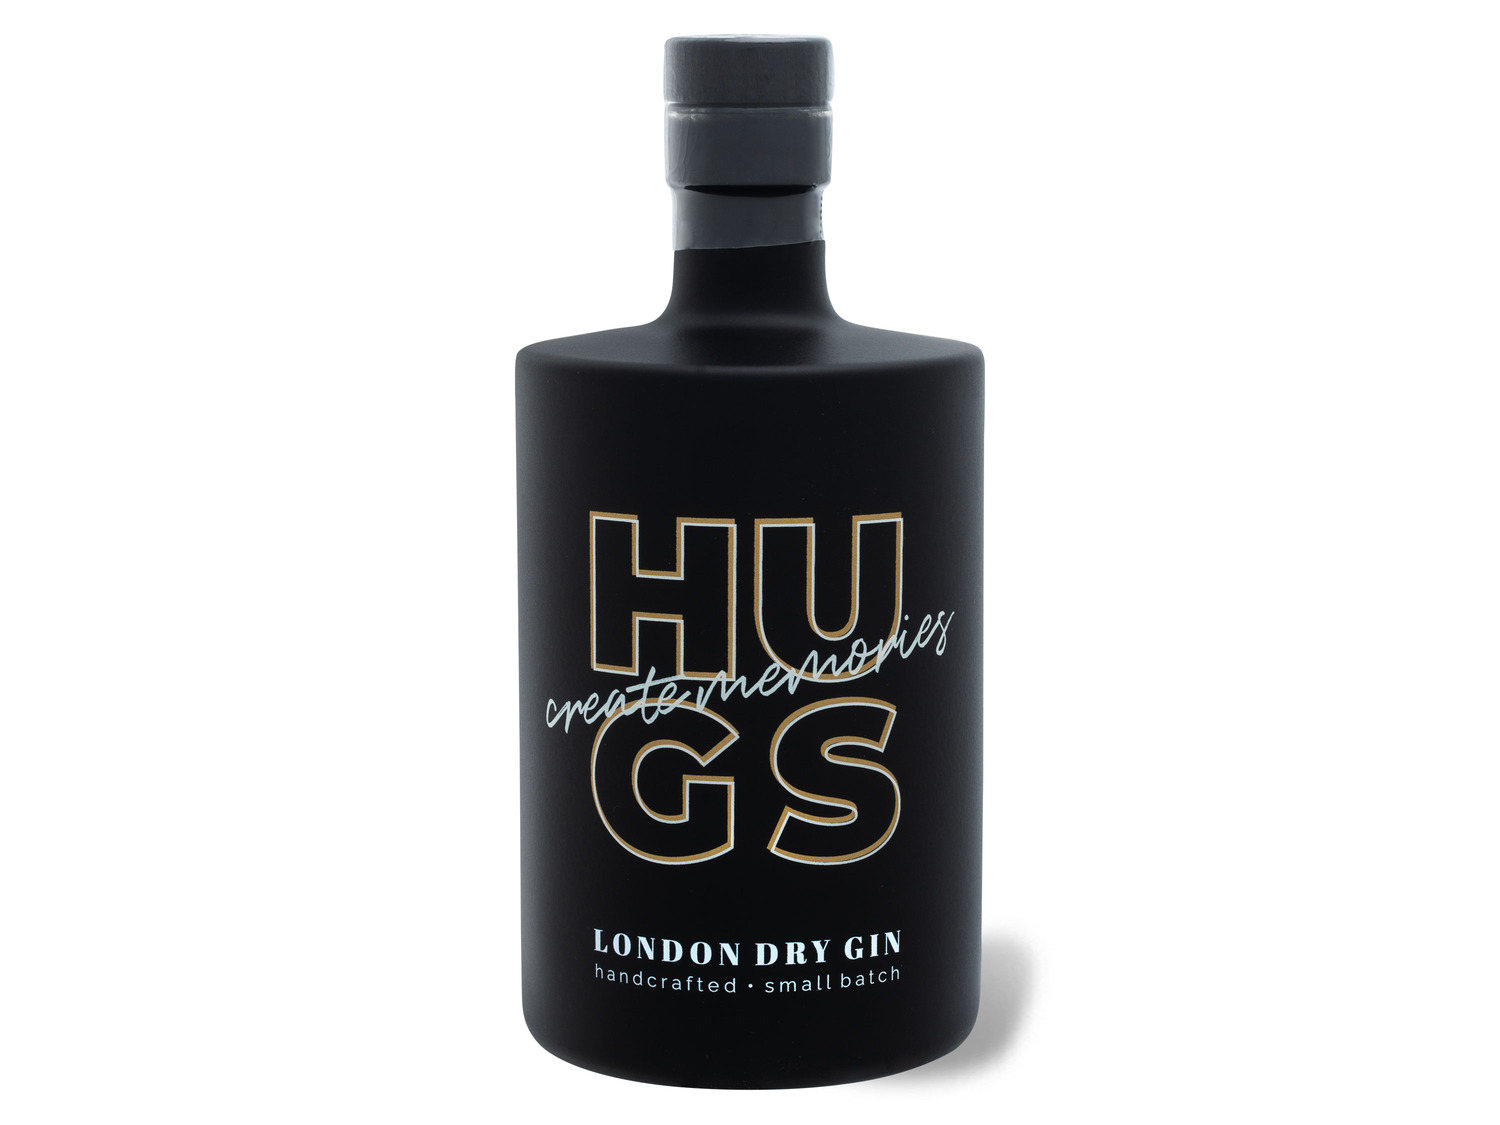 LIDL London Vol Cutura Dry | Distillery HUGS 45% Gin